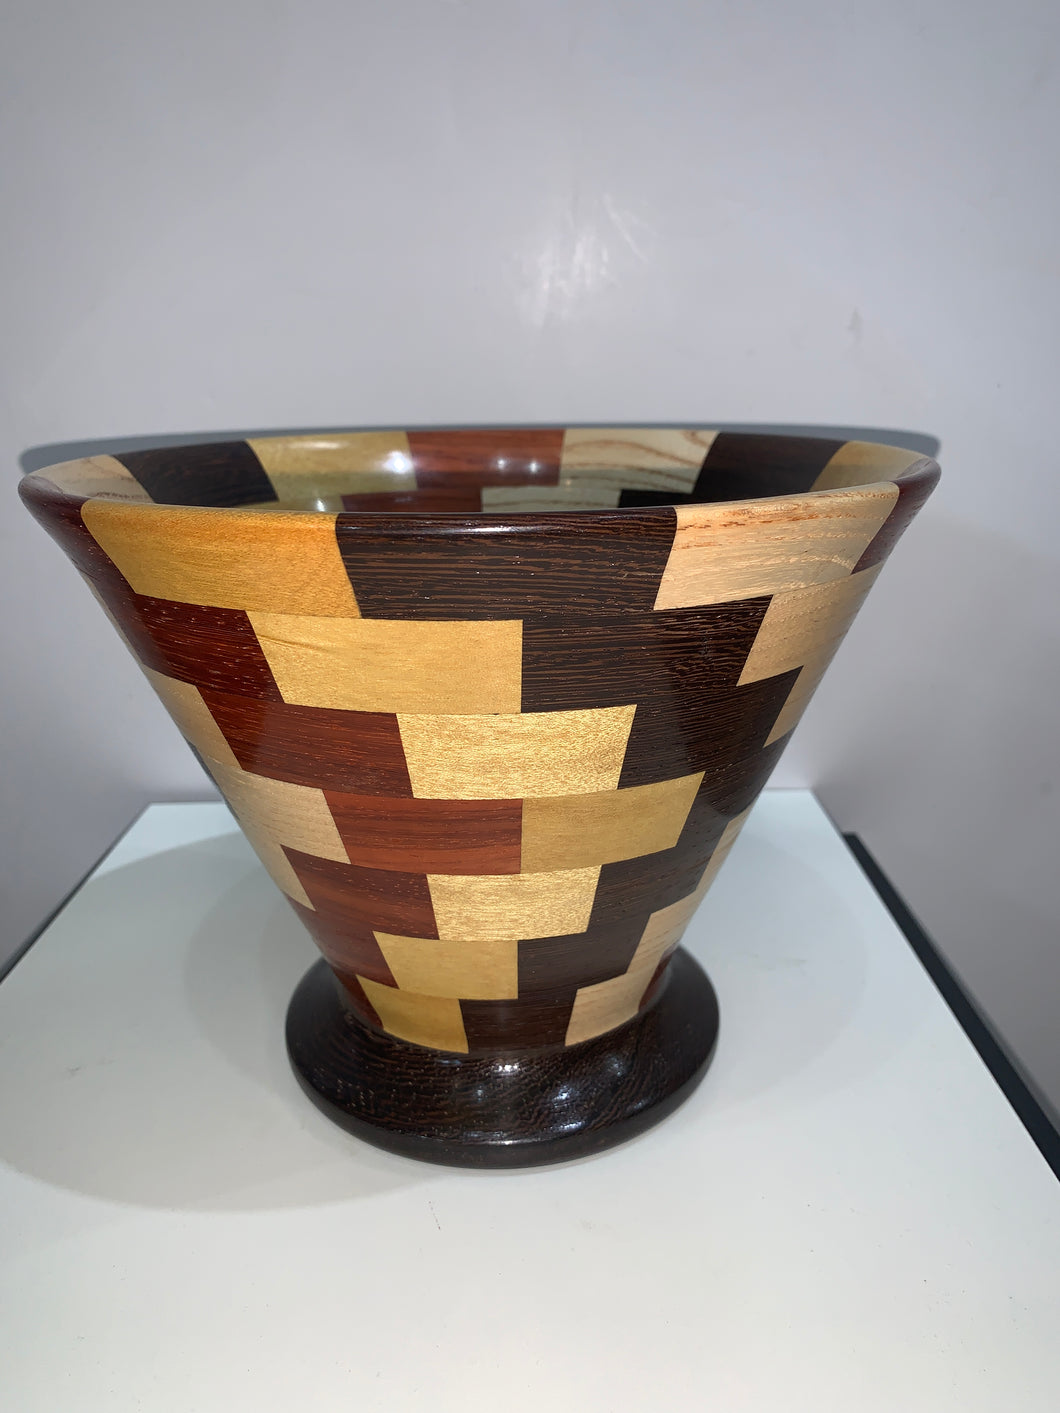 exquisite wooden bowl